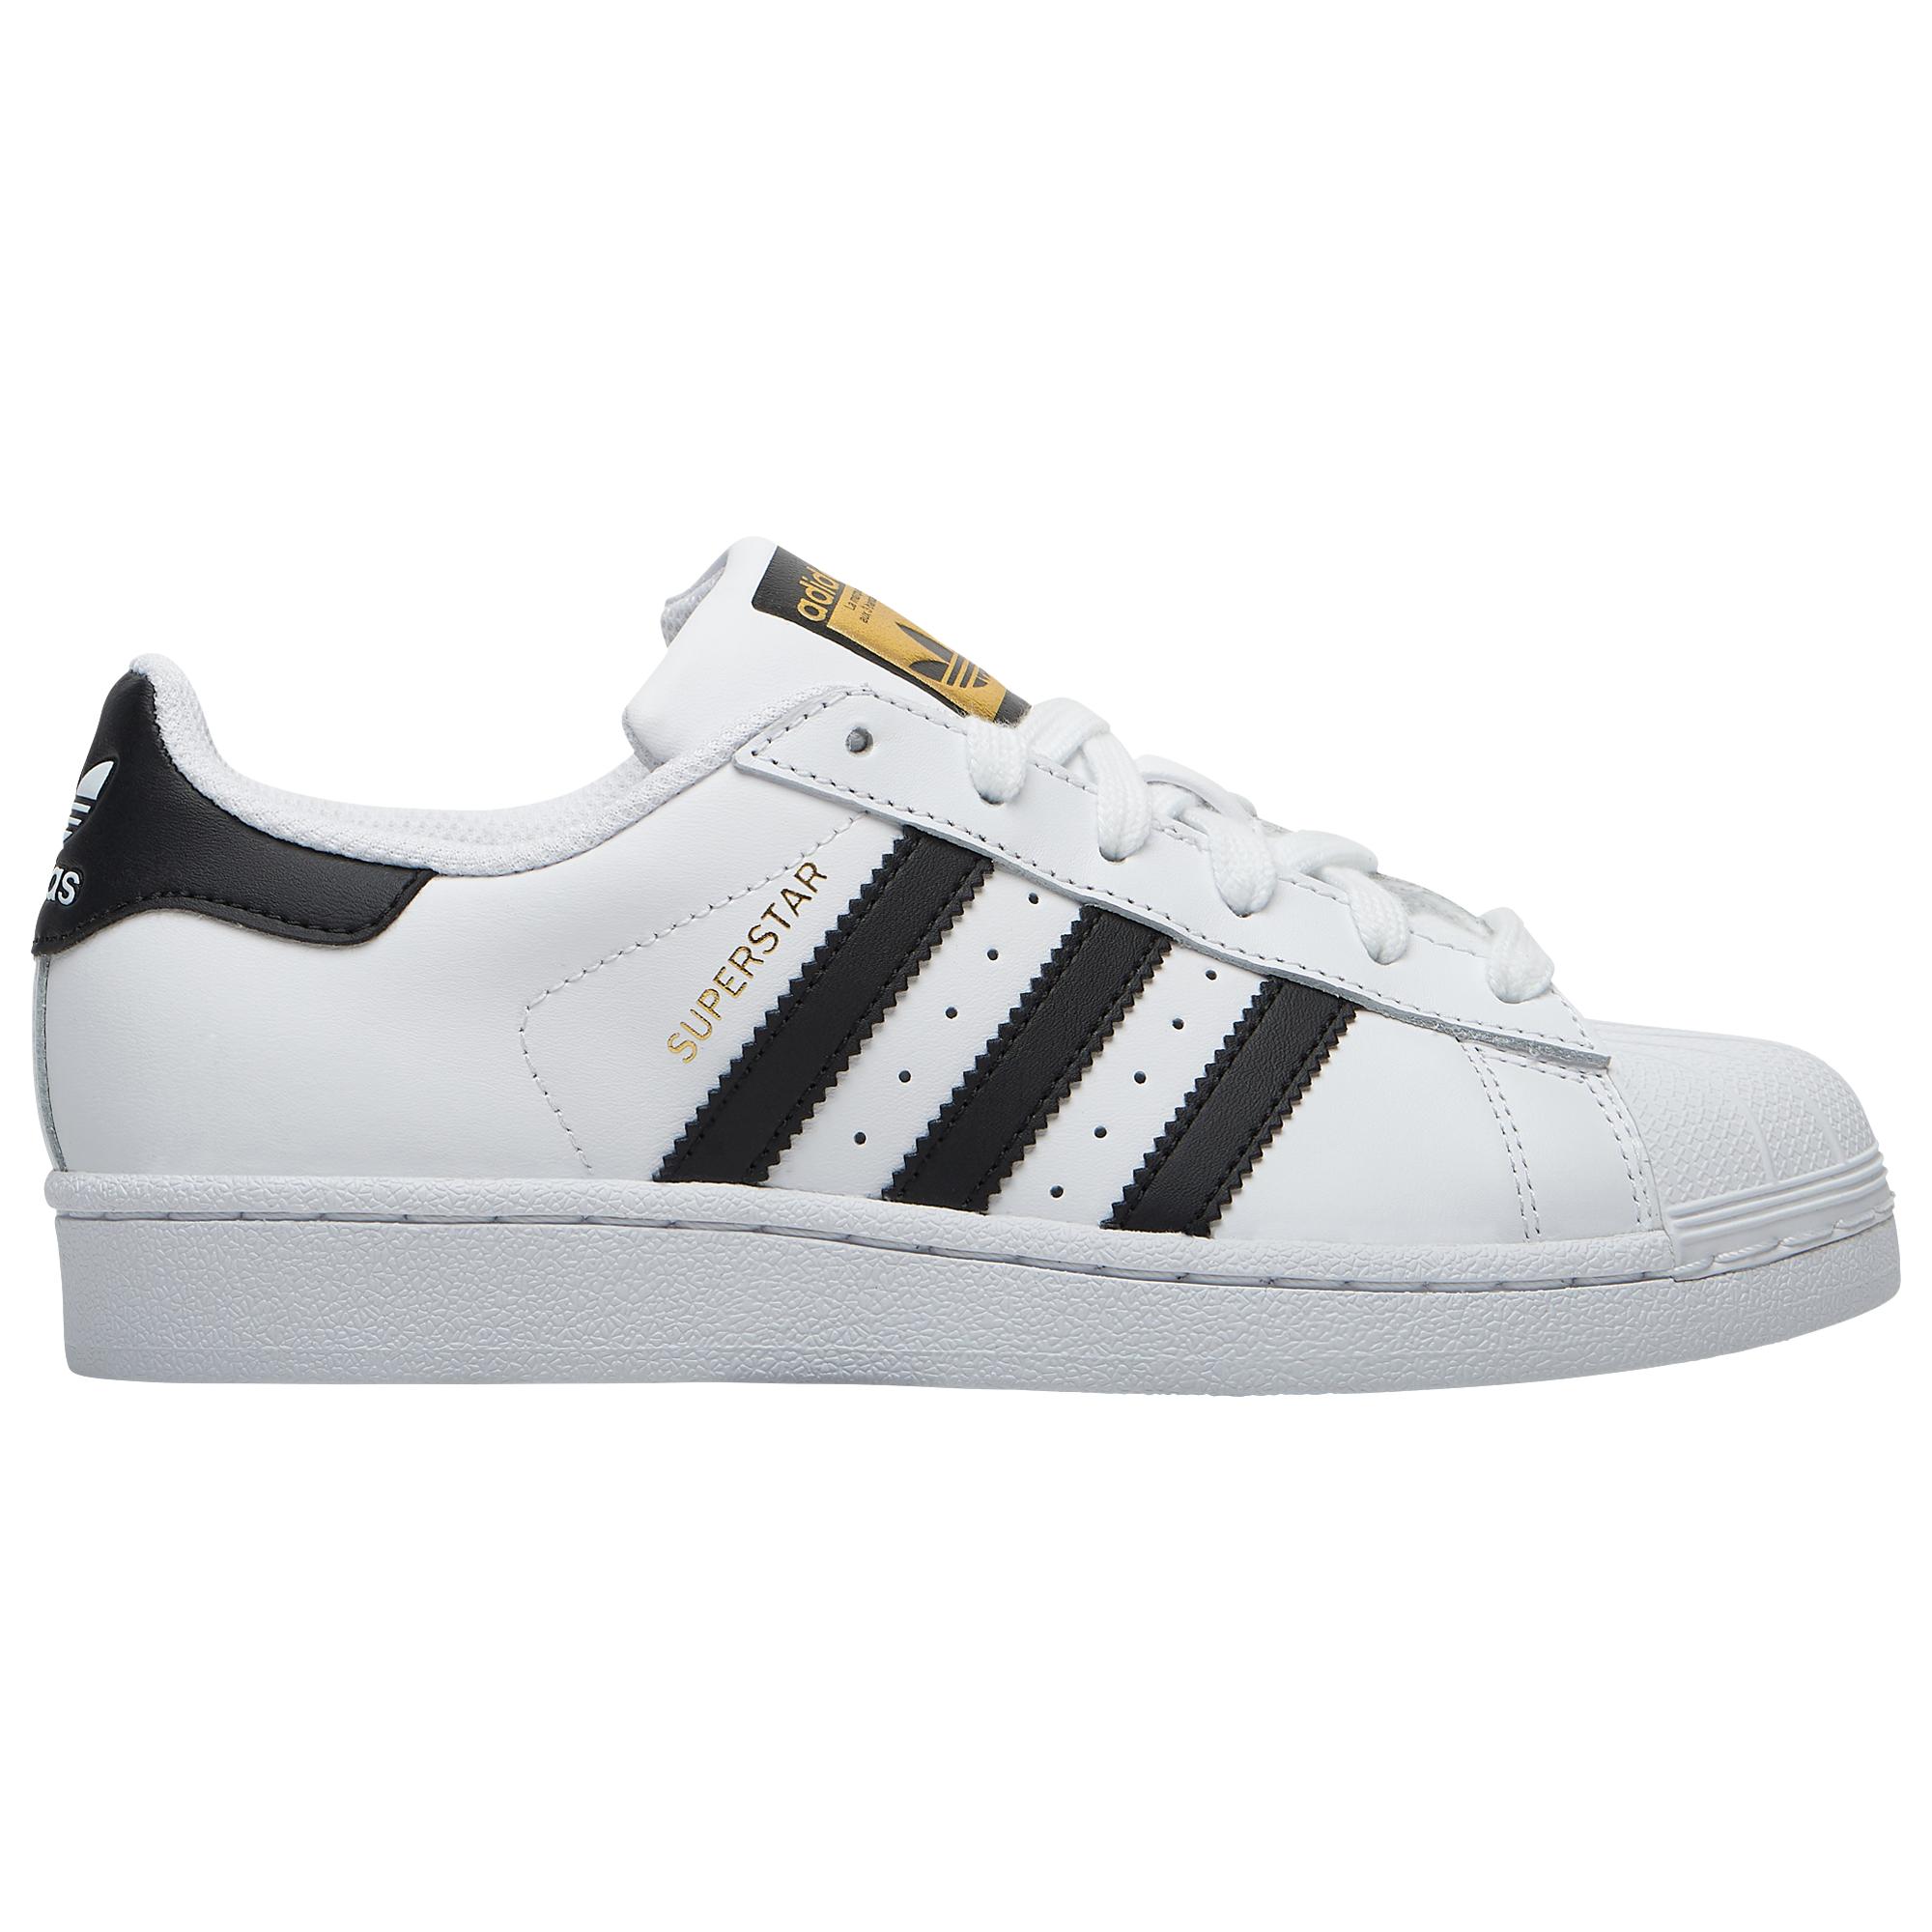 adidas Originals Suede Superstar Basketball Shoes in White/Black/White ...